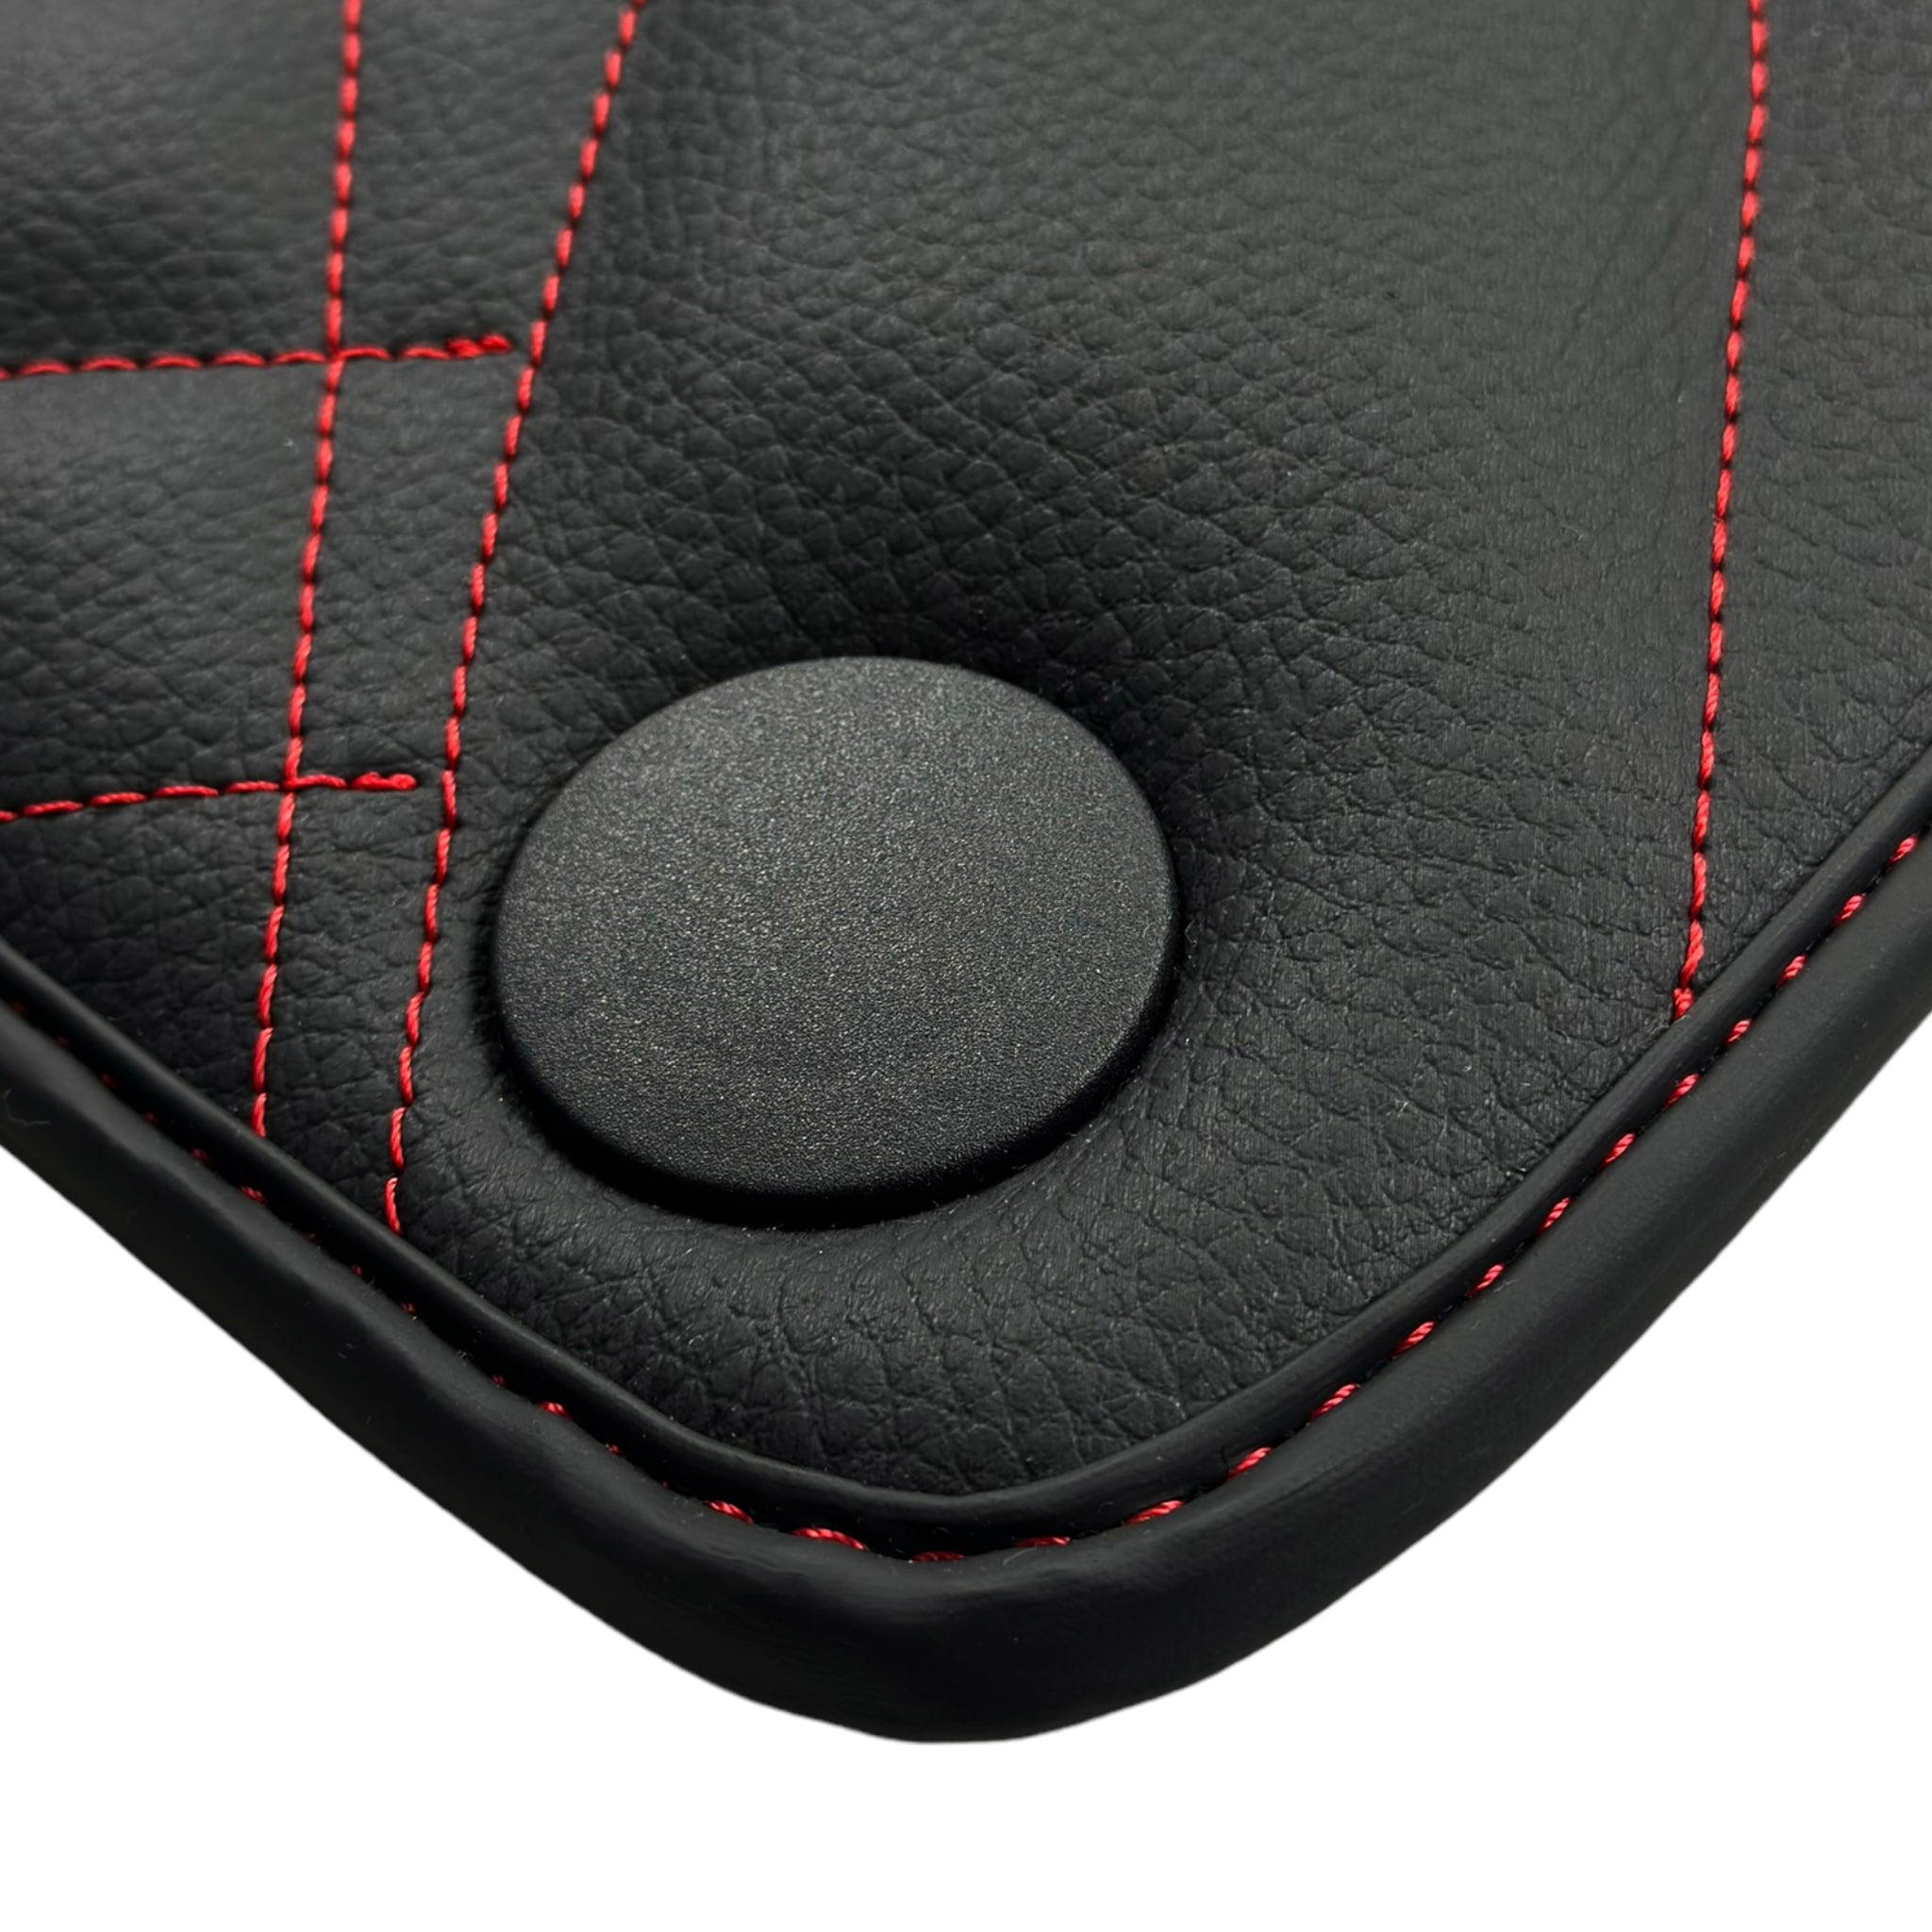 Black Leather Floor Mats For Mercedes Benz E-Class A207 Convertible (2010-2013)